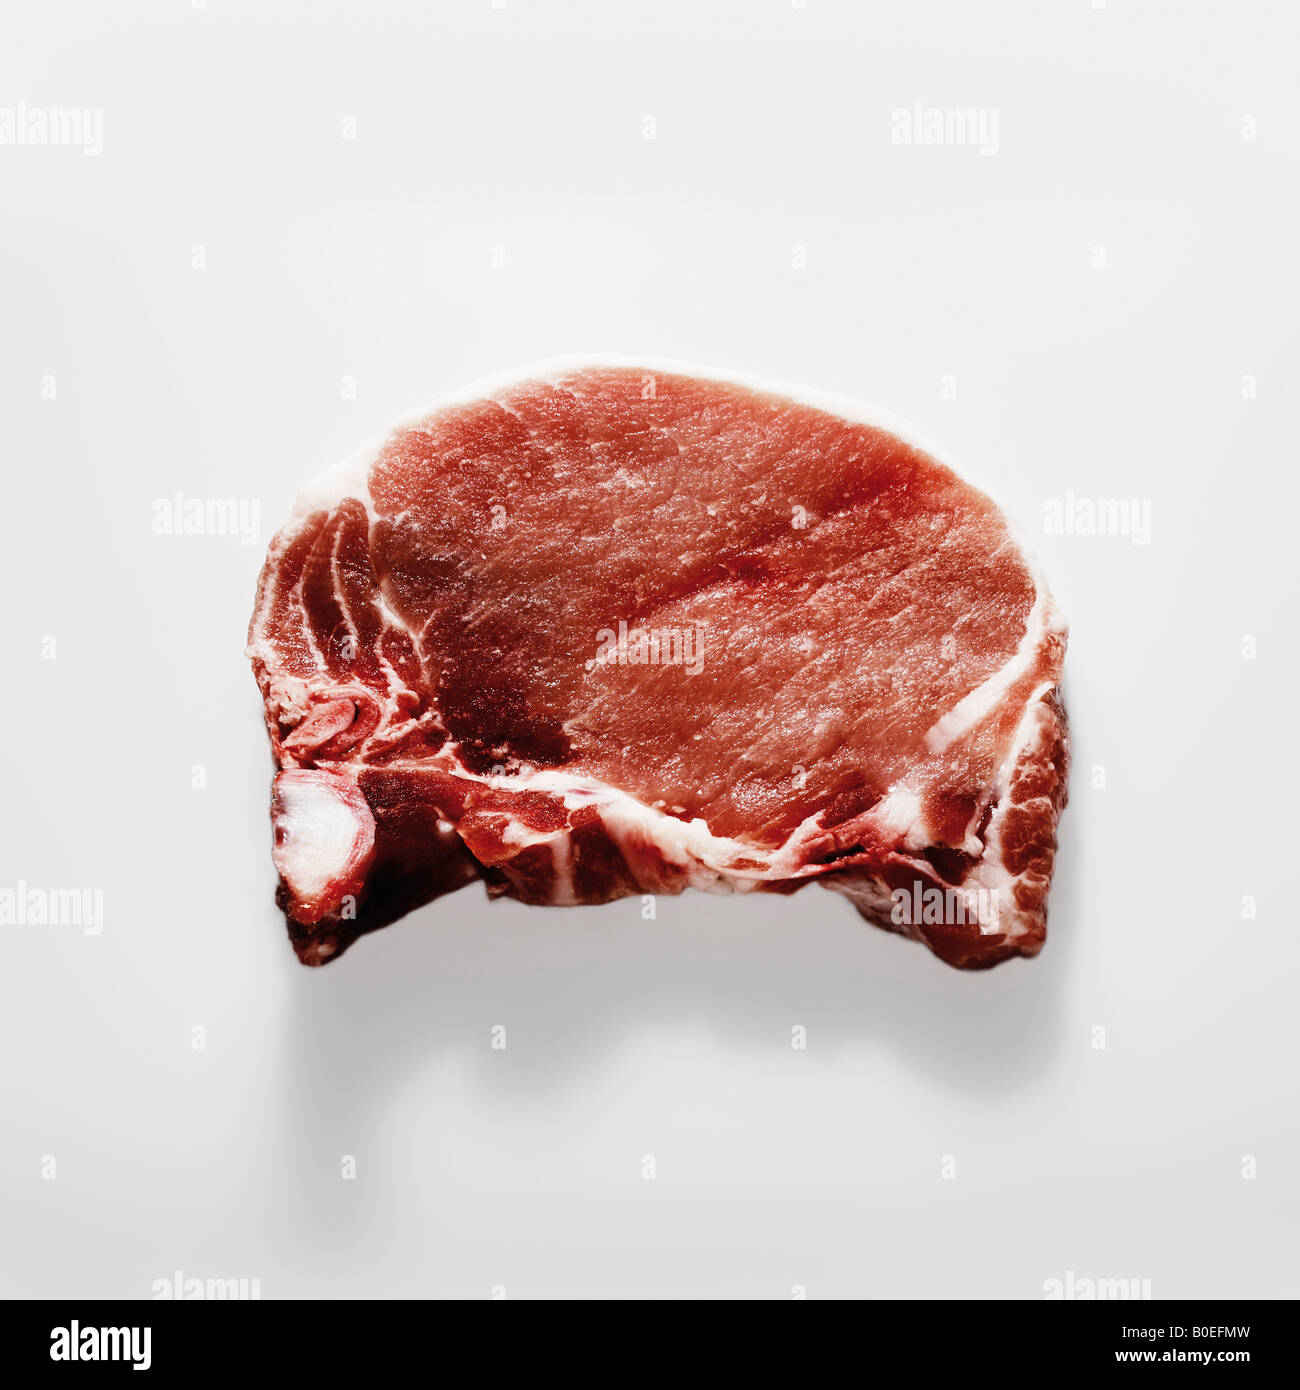 Raw meat / pork chop on white background Stock Photo